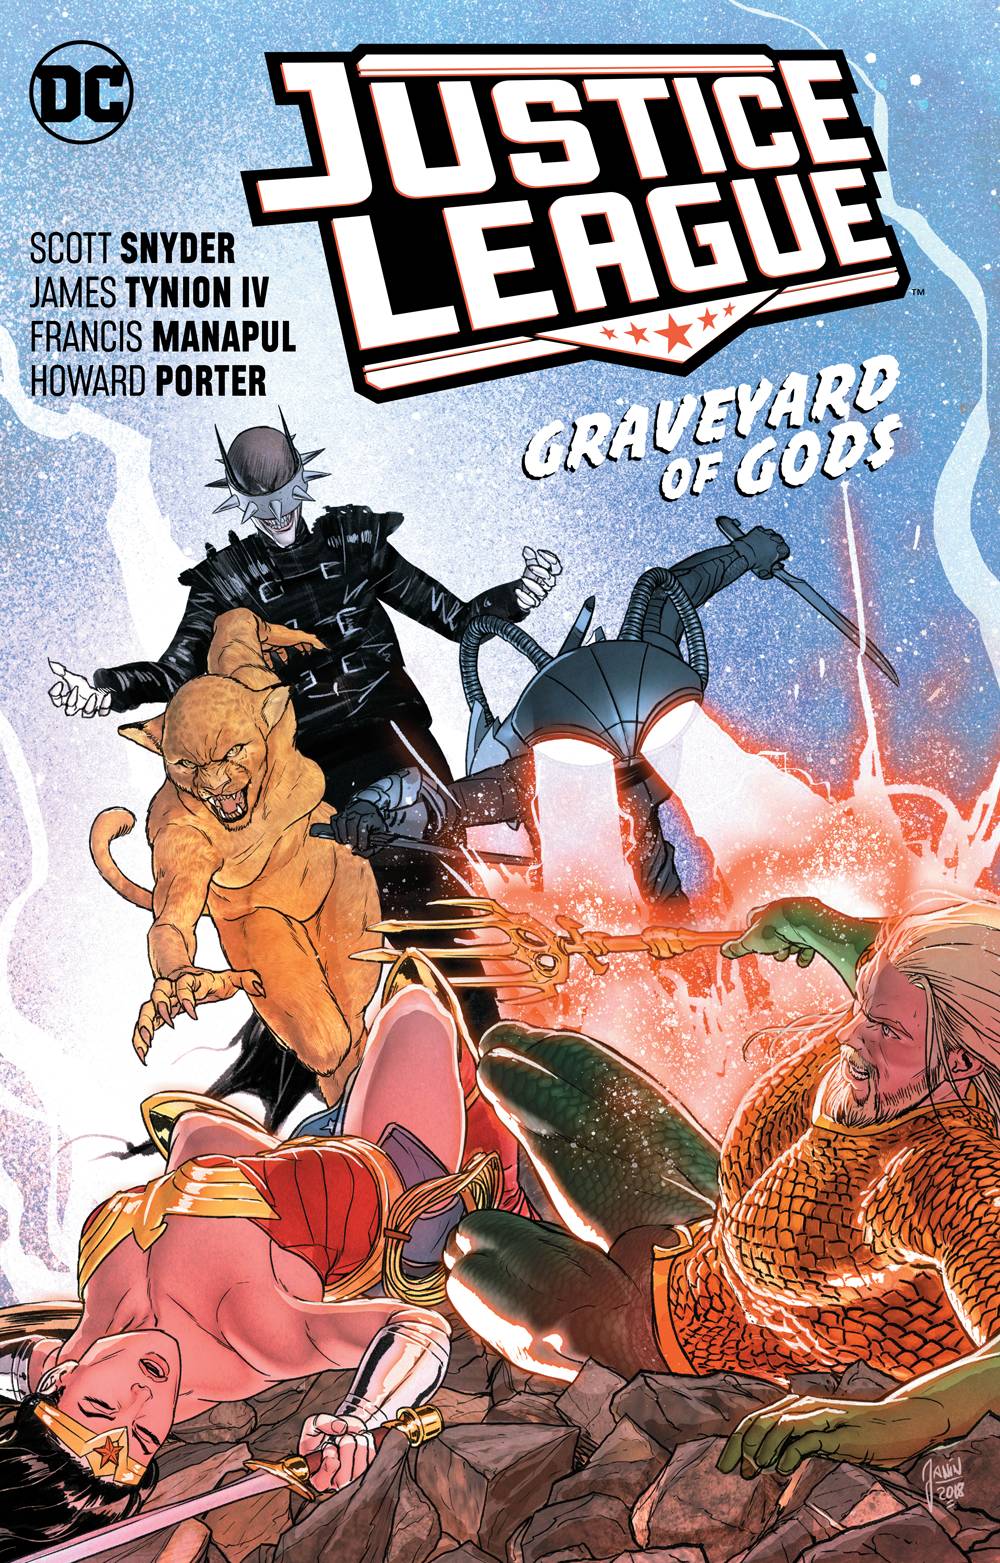 Justice League Graphic Novel Volume 2 Graveyard of Gods